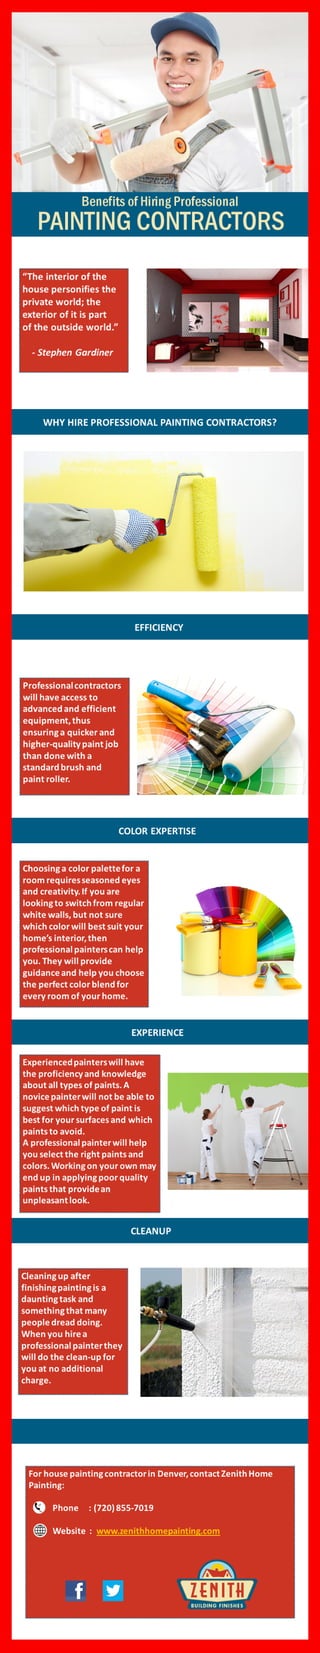 Benefits of Hiring Painting Contractor in Denver